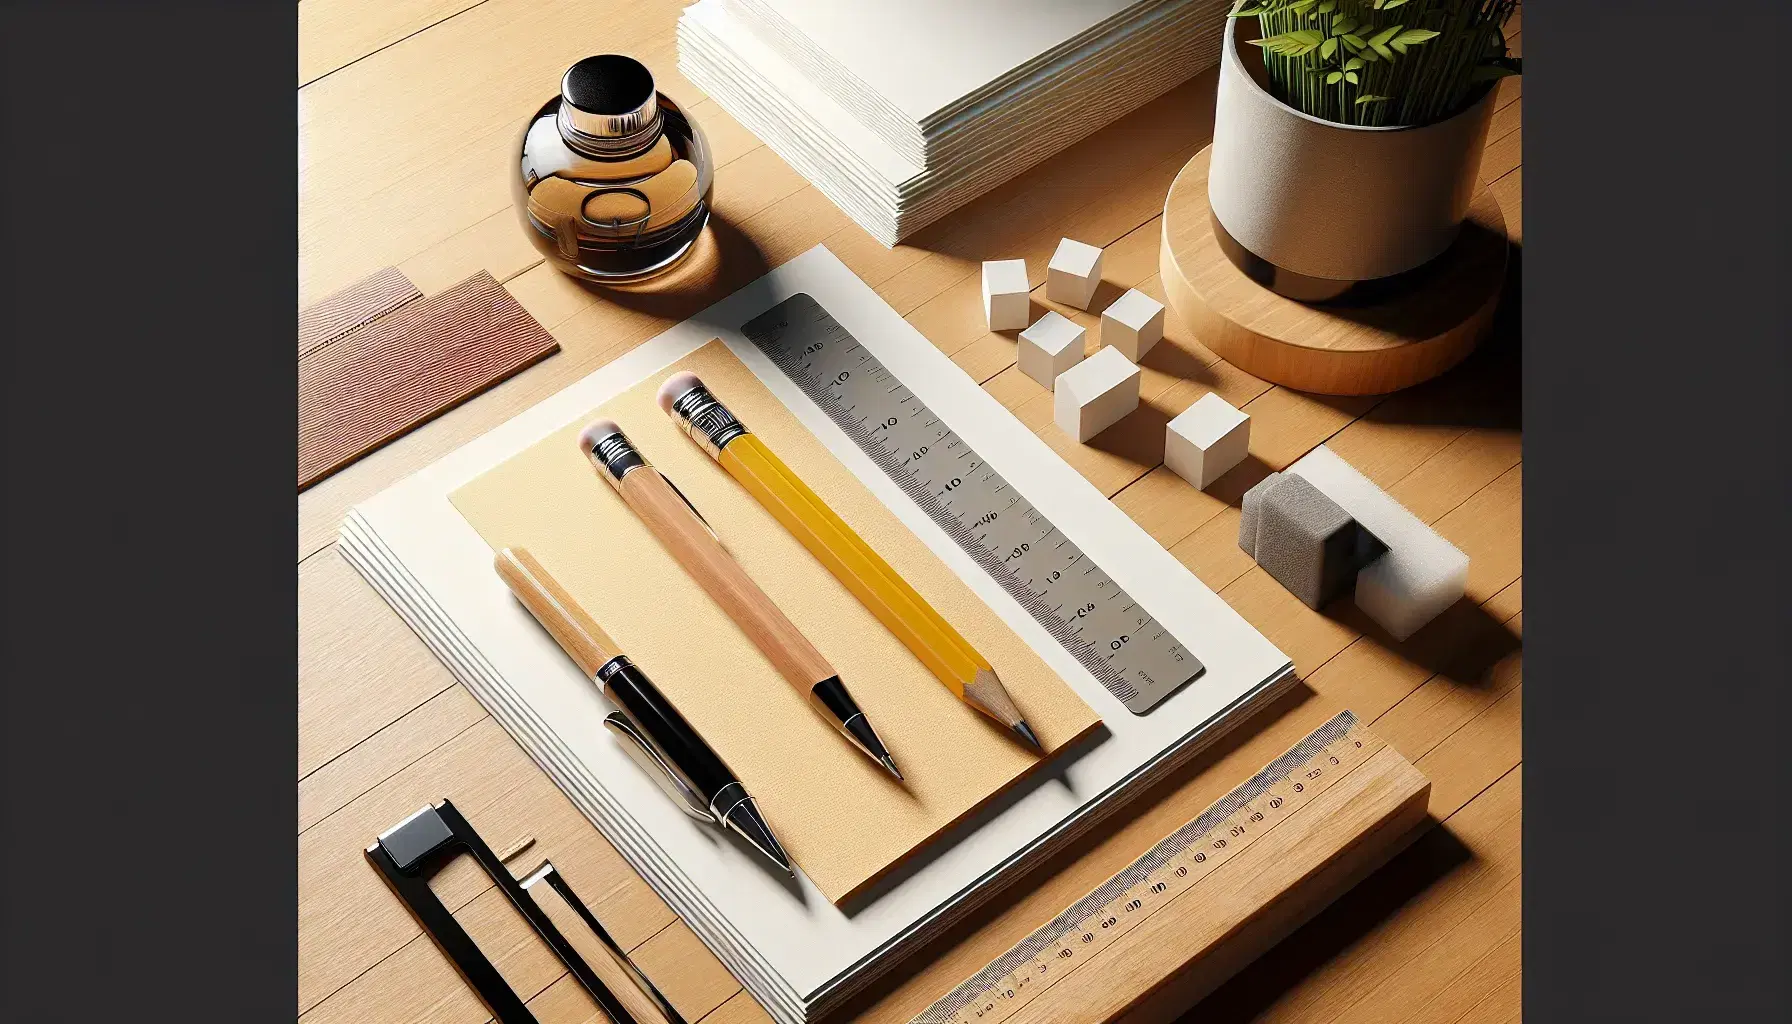 Escritorio de madera claro con papeles, lápiz amarillo, regla transparente, tintero con pluma estilográfica y borrador blanco, junto a planta en maceta terracota.